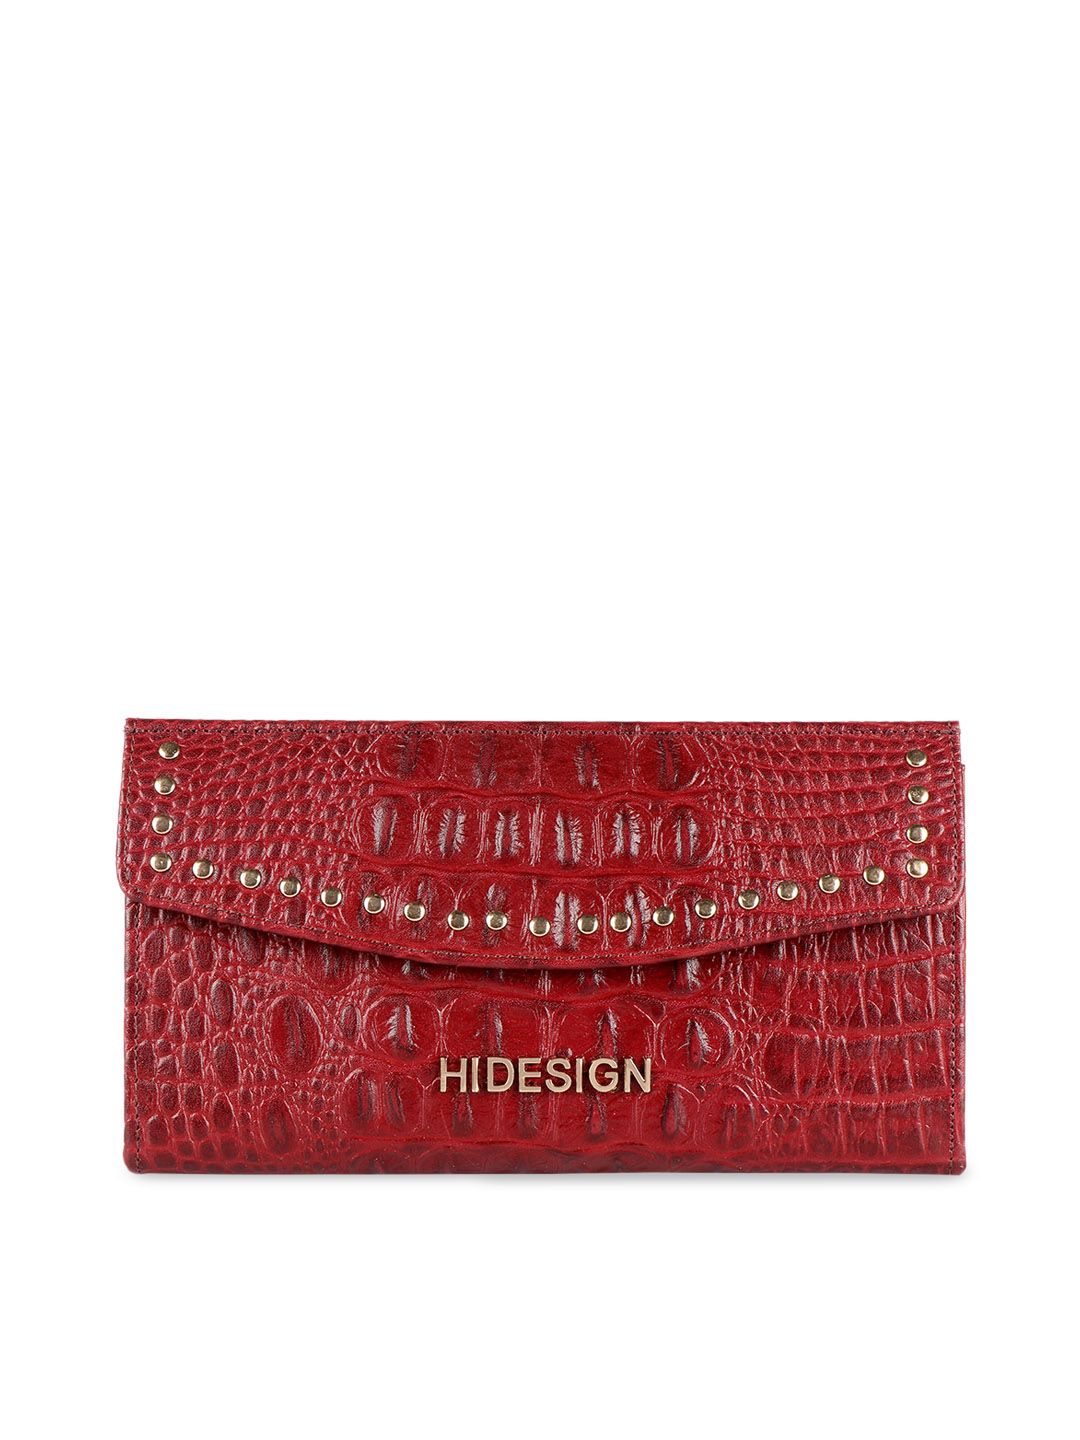 Hidesign Women Red Crocodile Skin Textured Zip Around Leather Wallet Price in India